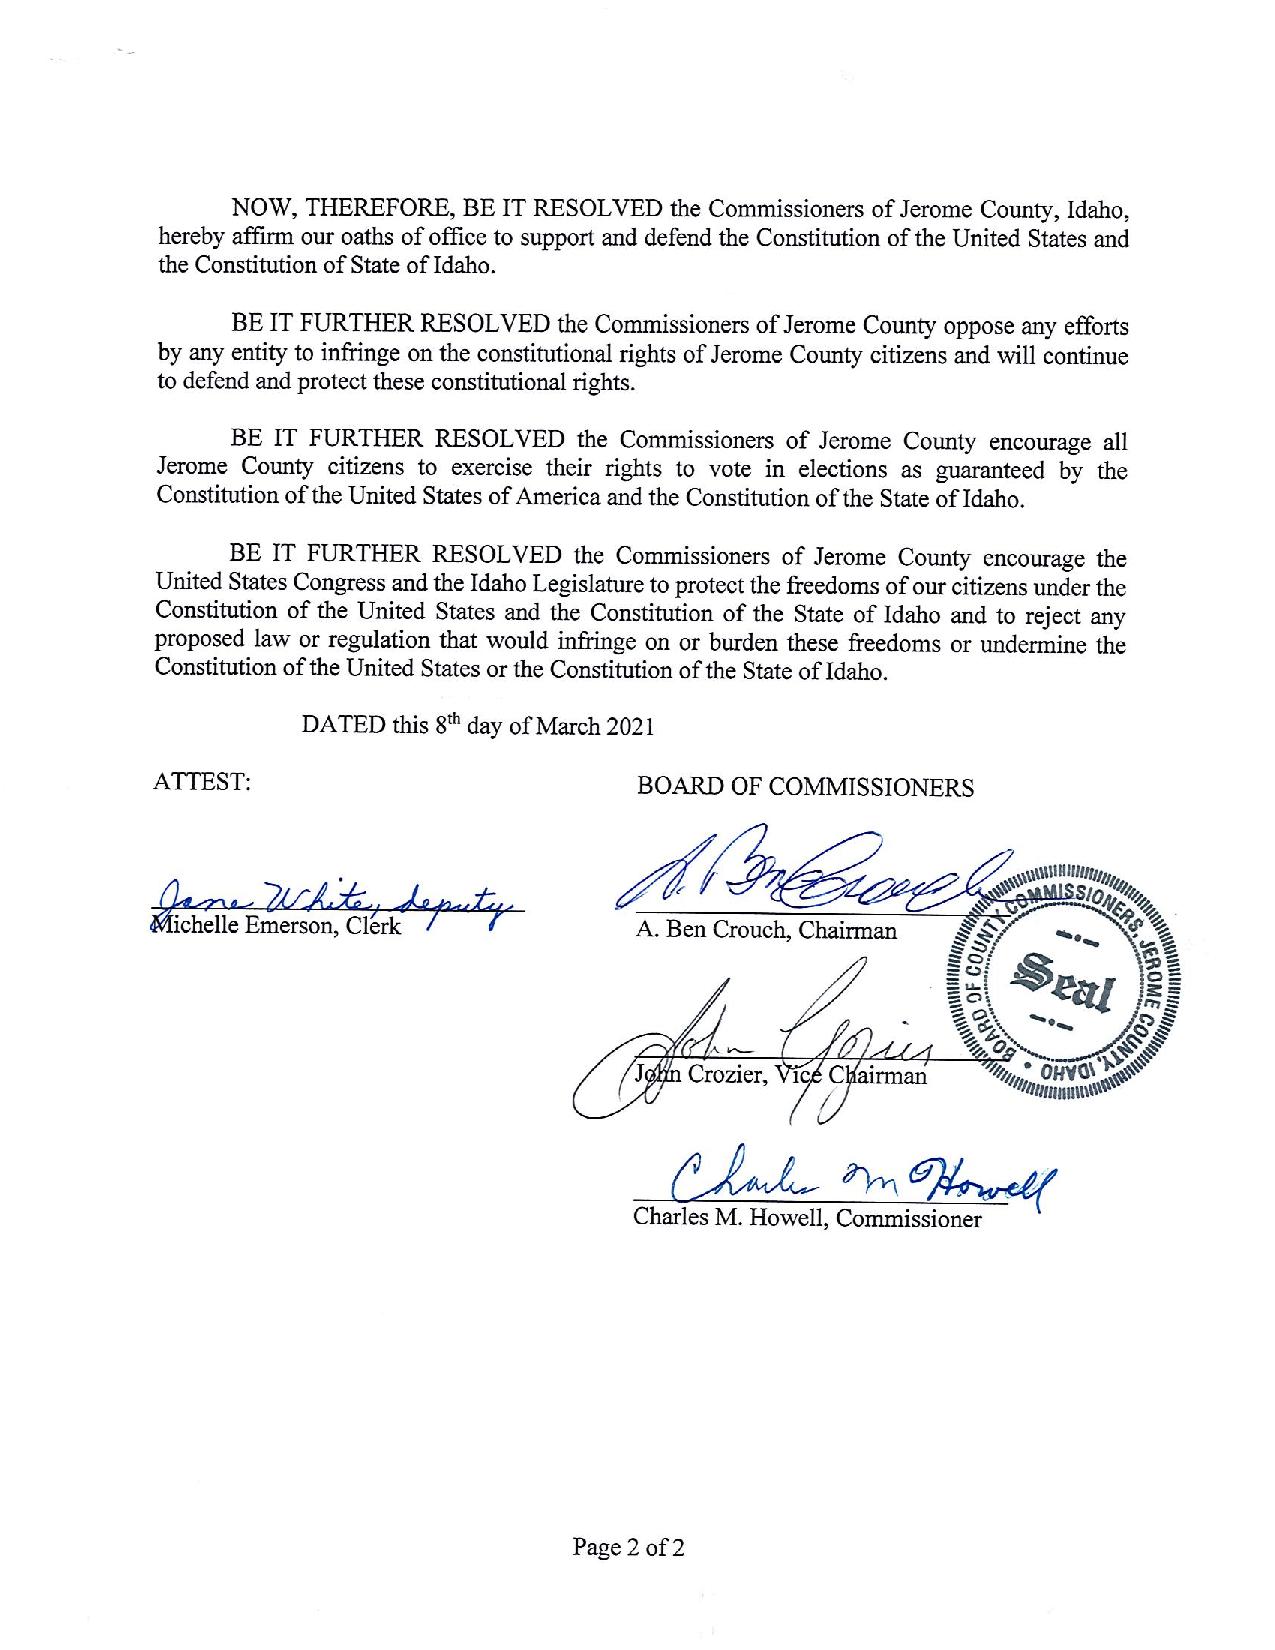 Jerome County Idaho Resolution Page 2